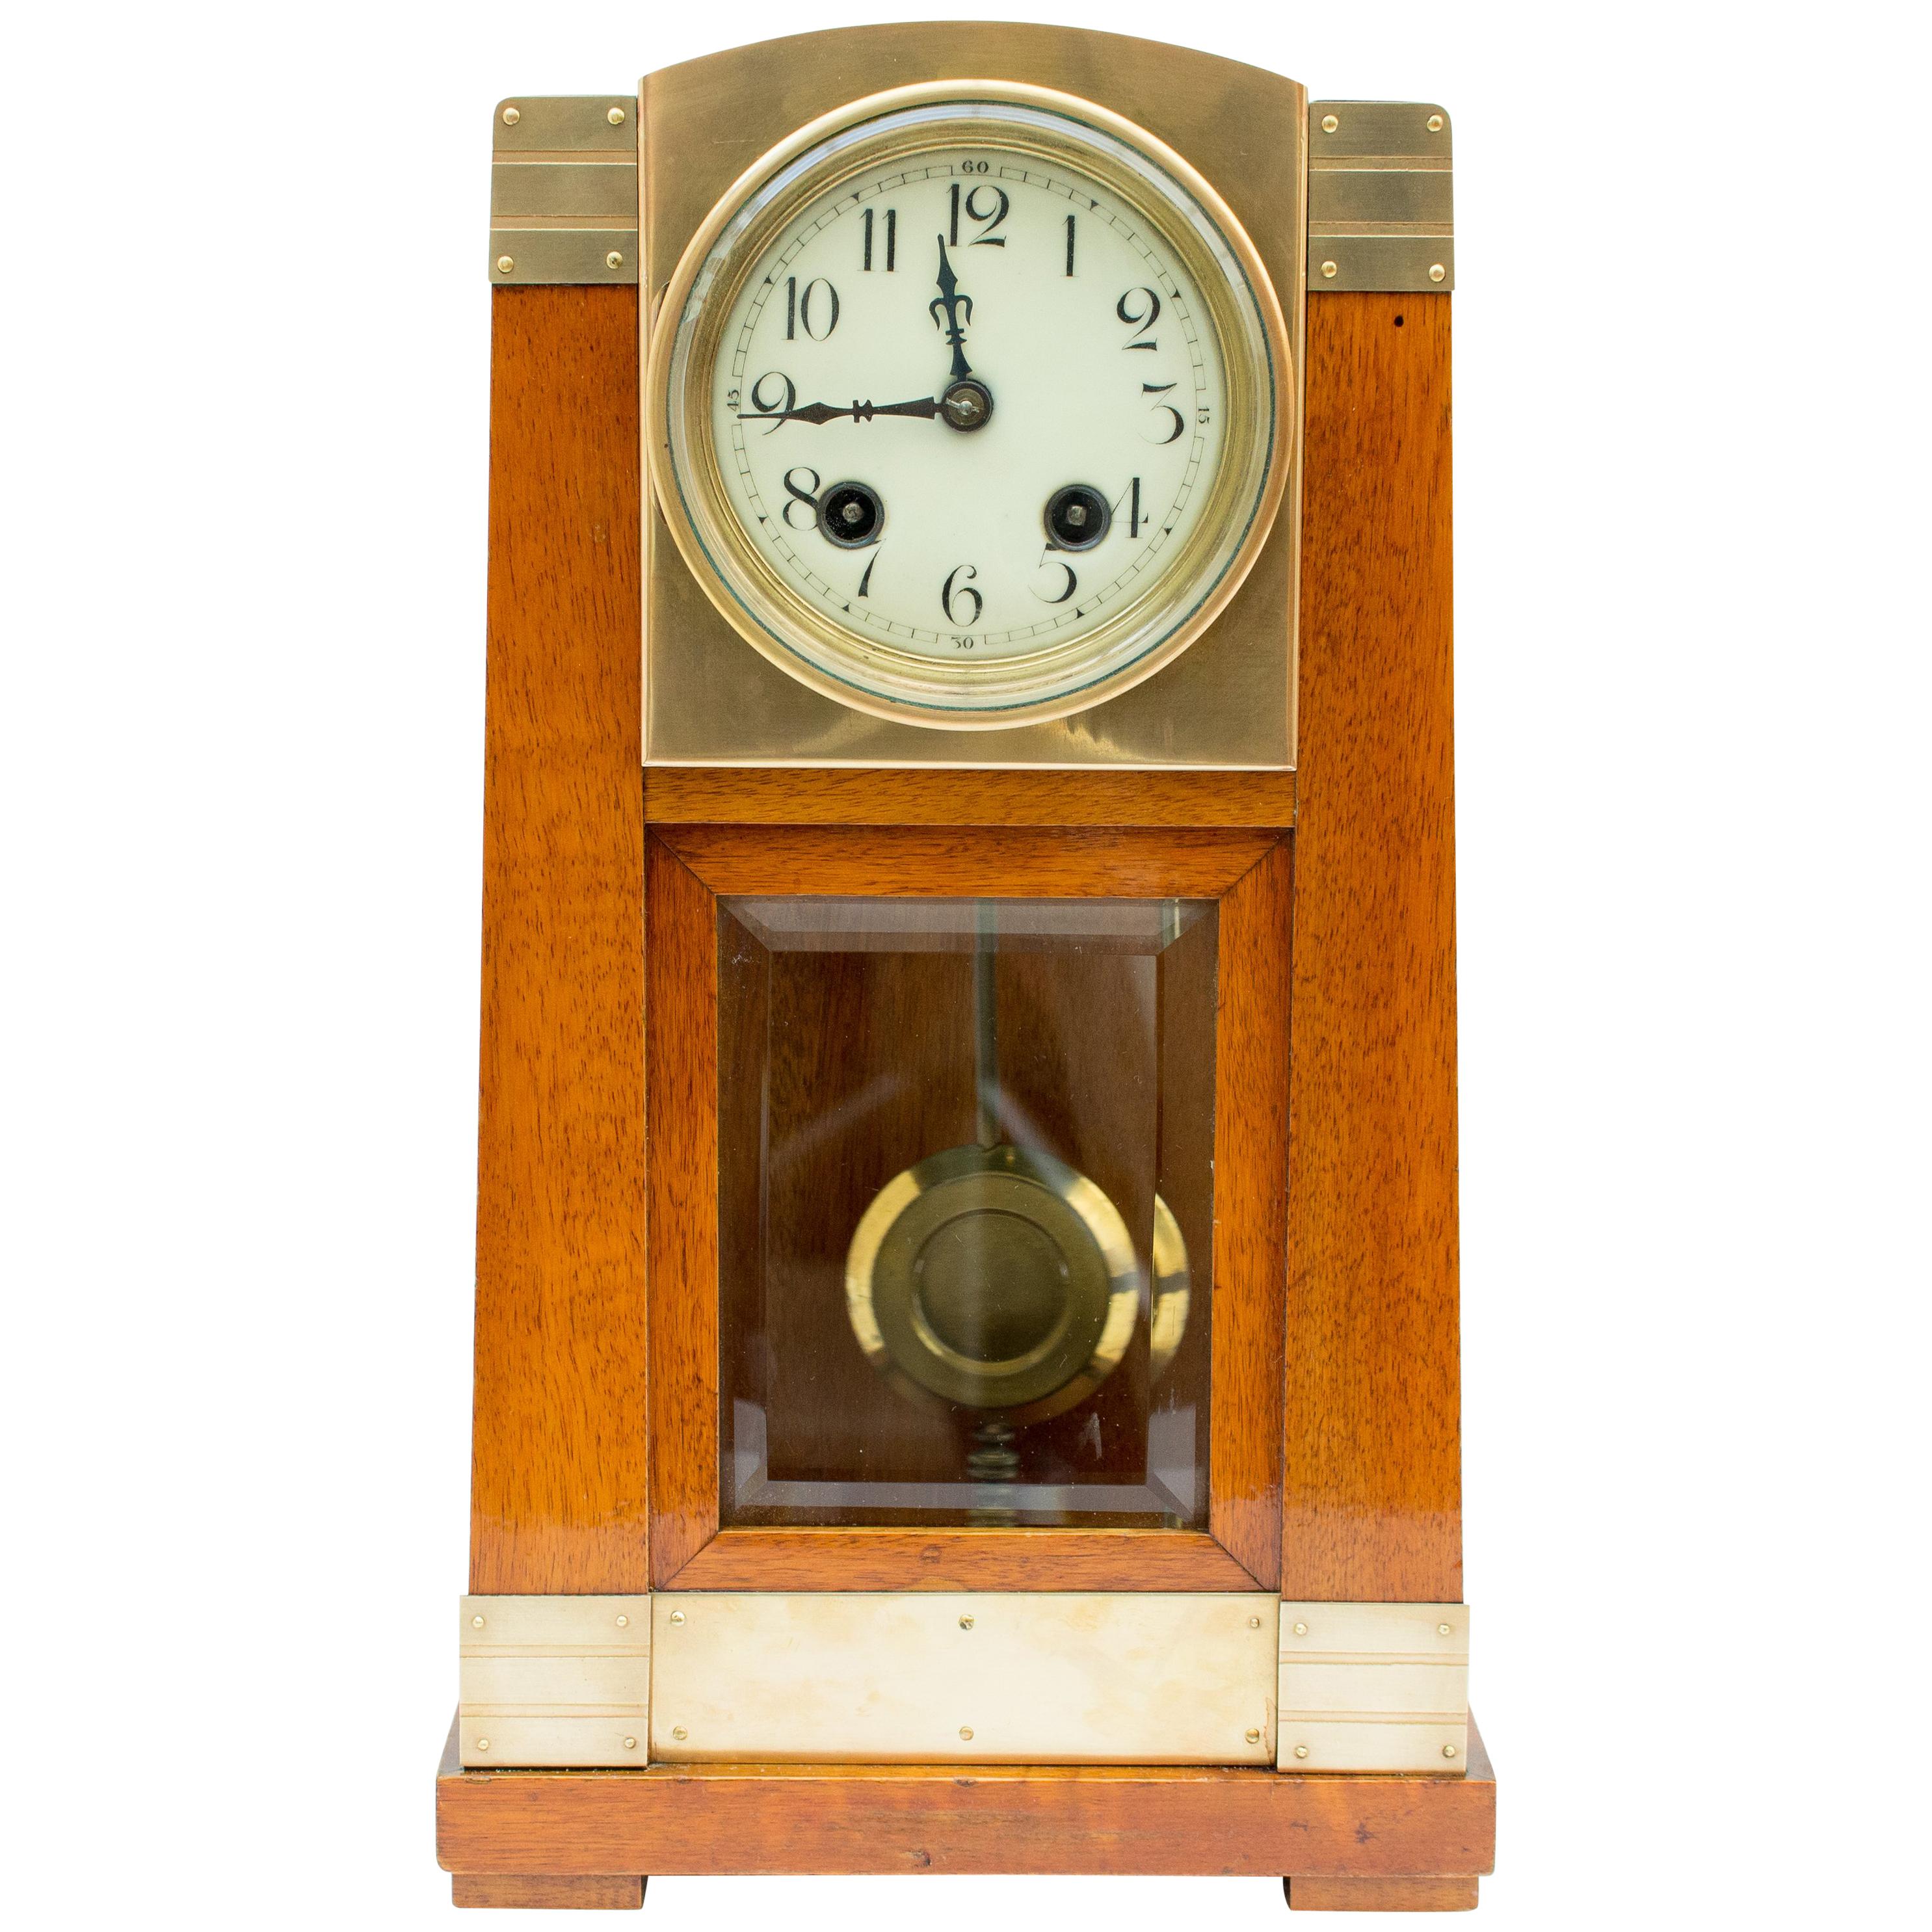 Art Nouveau Mahogany Table Clock, Gustave Serrurier-Bovy, Pfeilkreuz